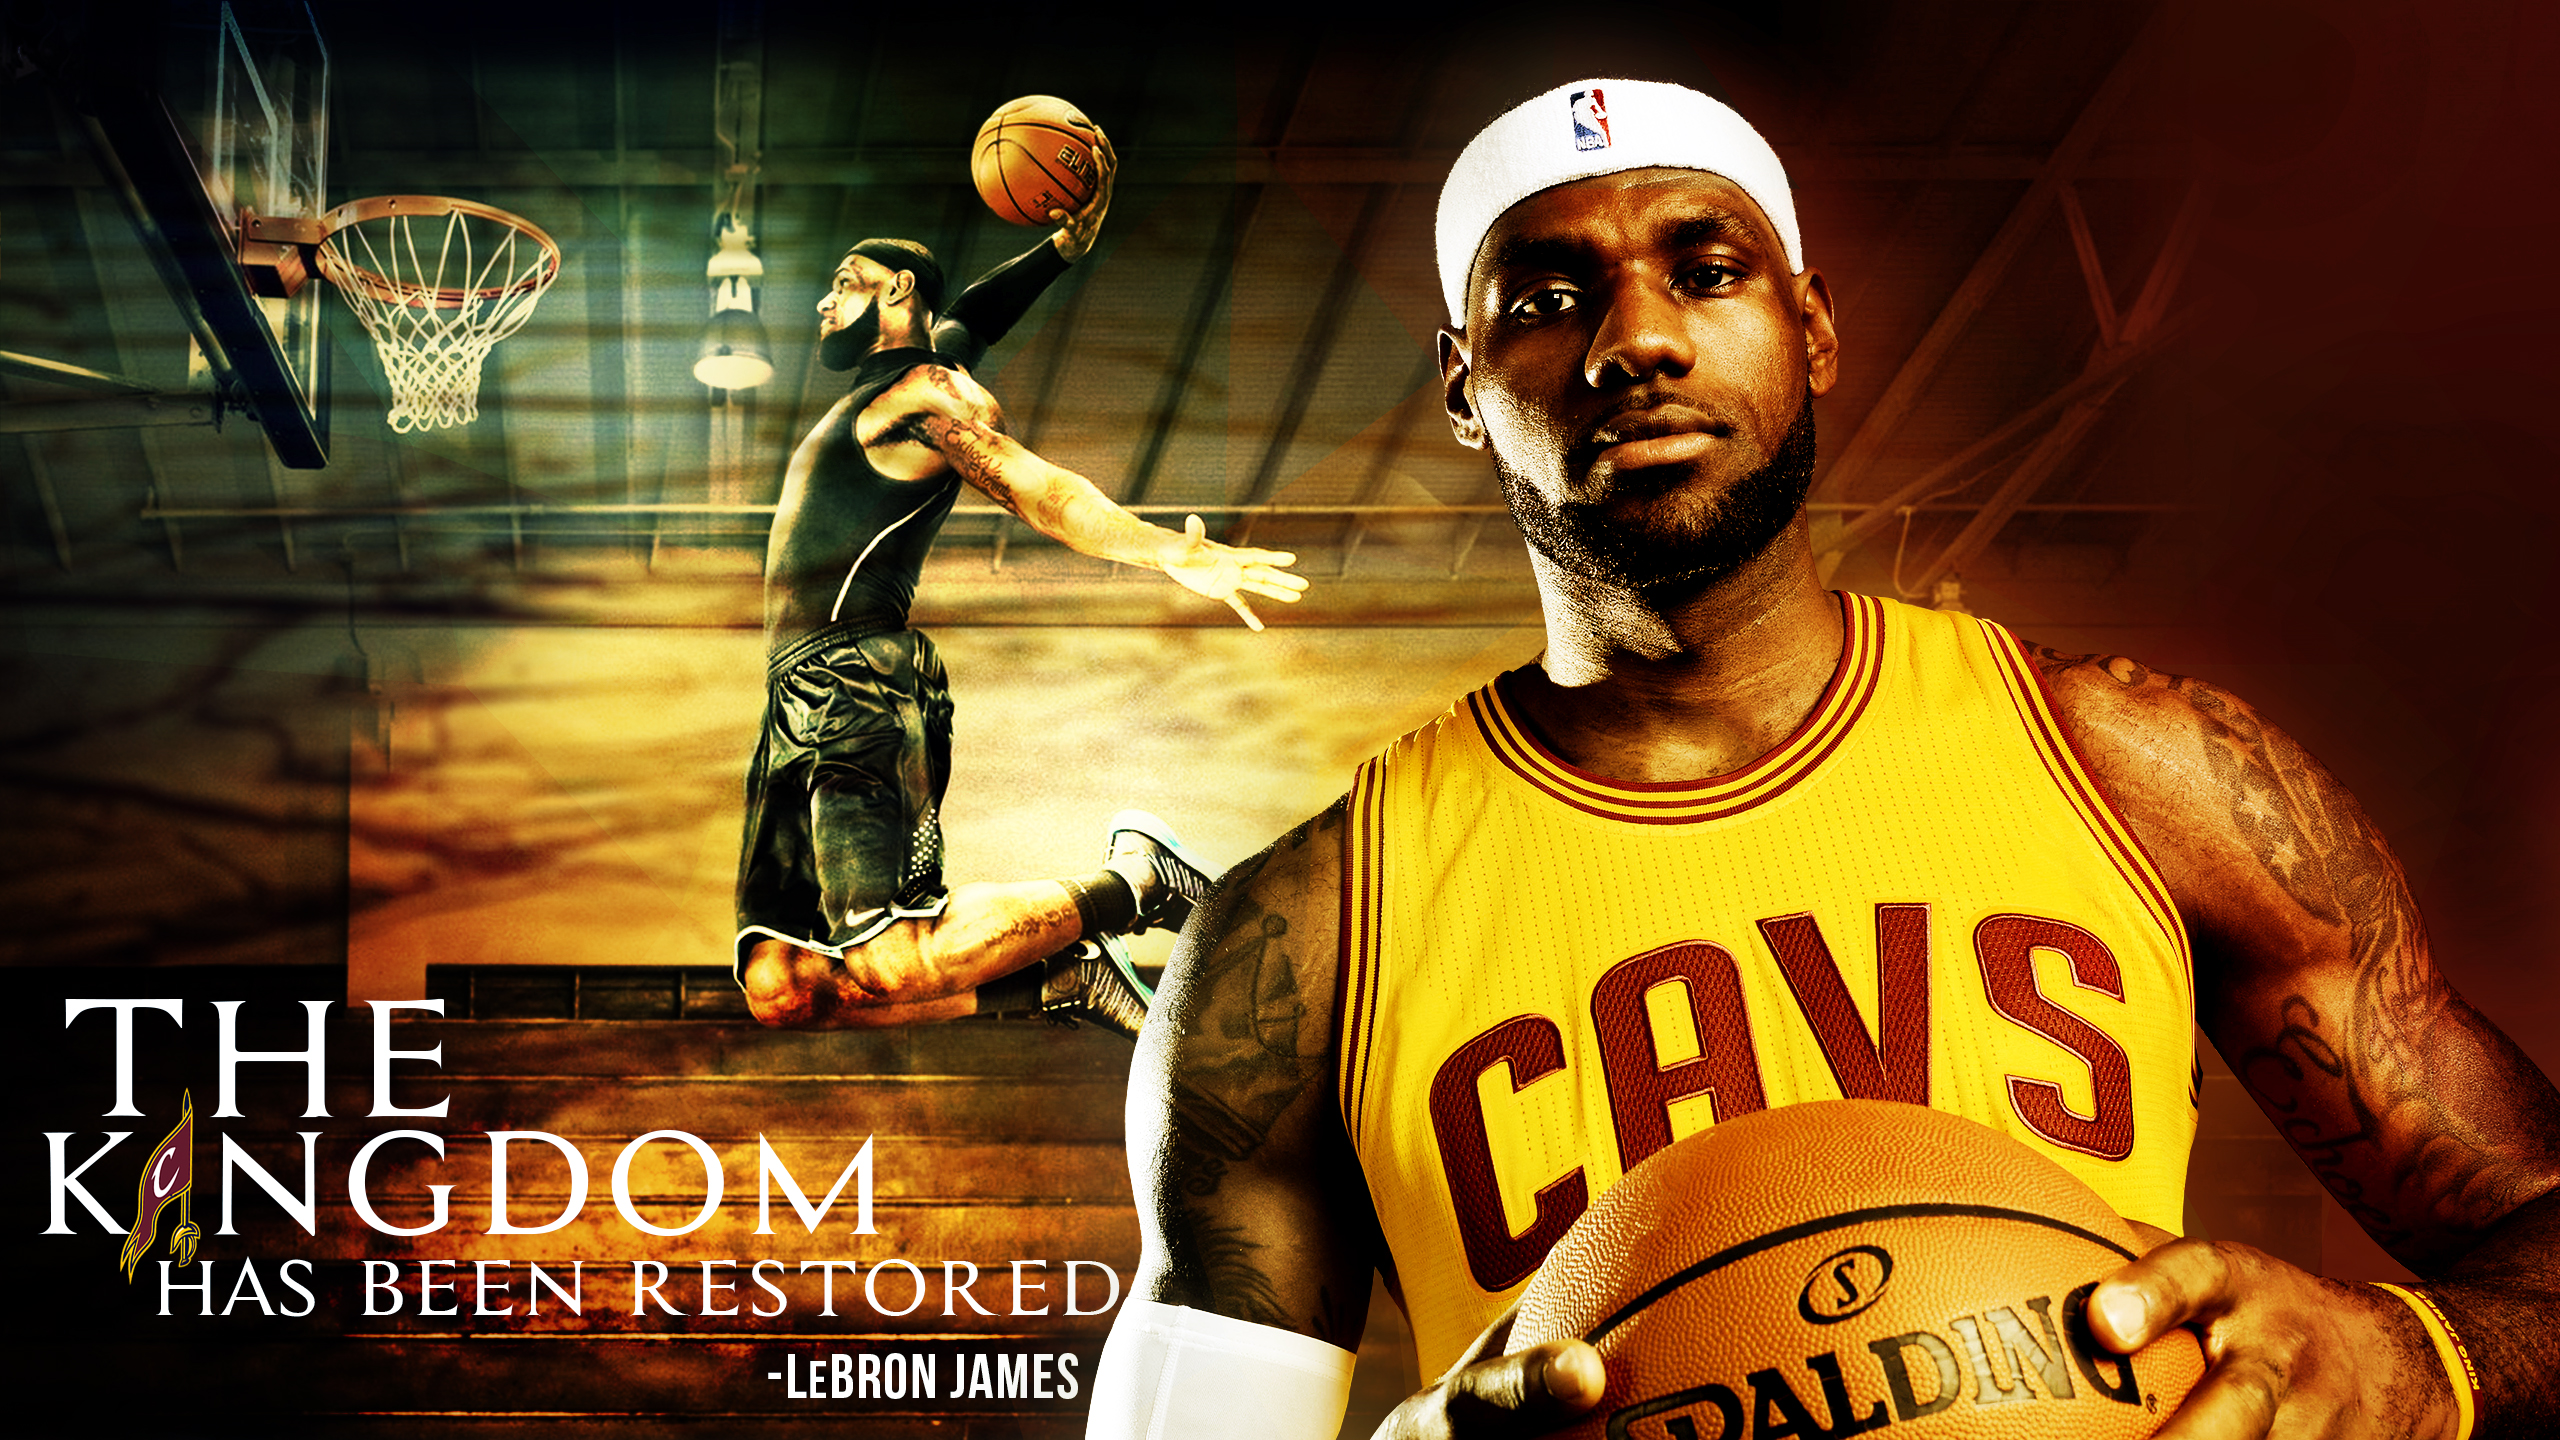 Sports LeBron James HD Wallpaper | Background Image